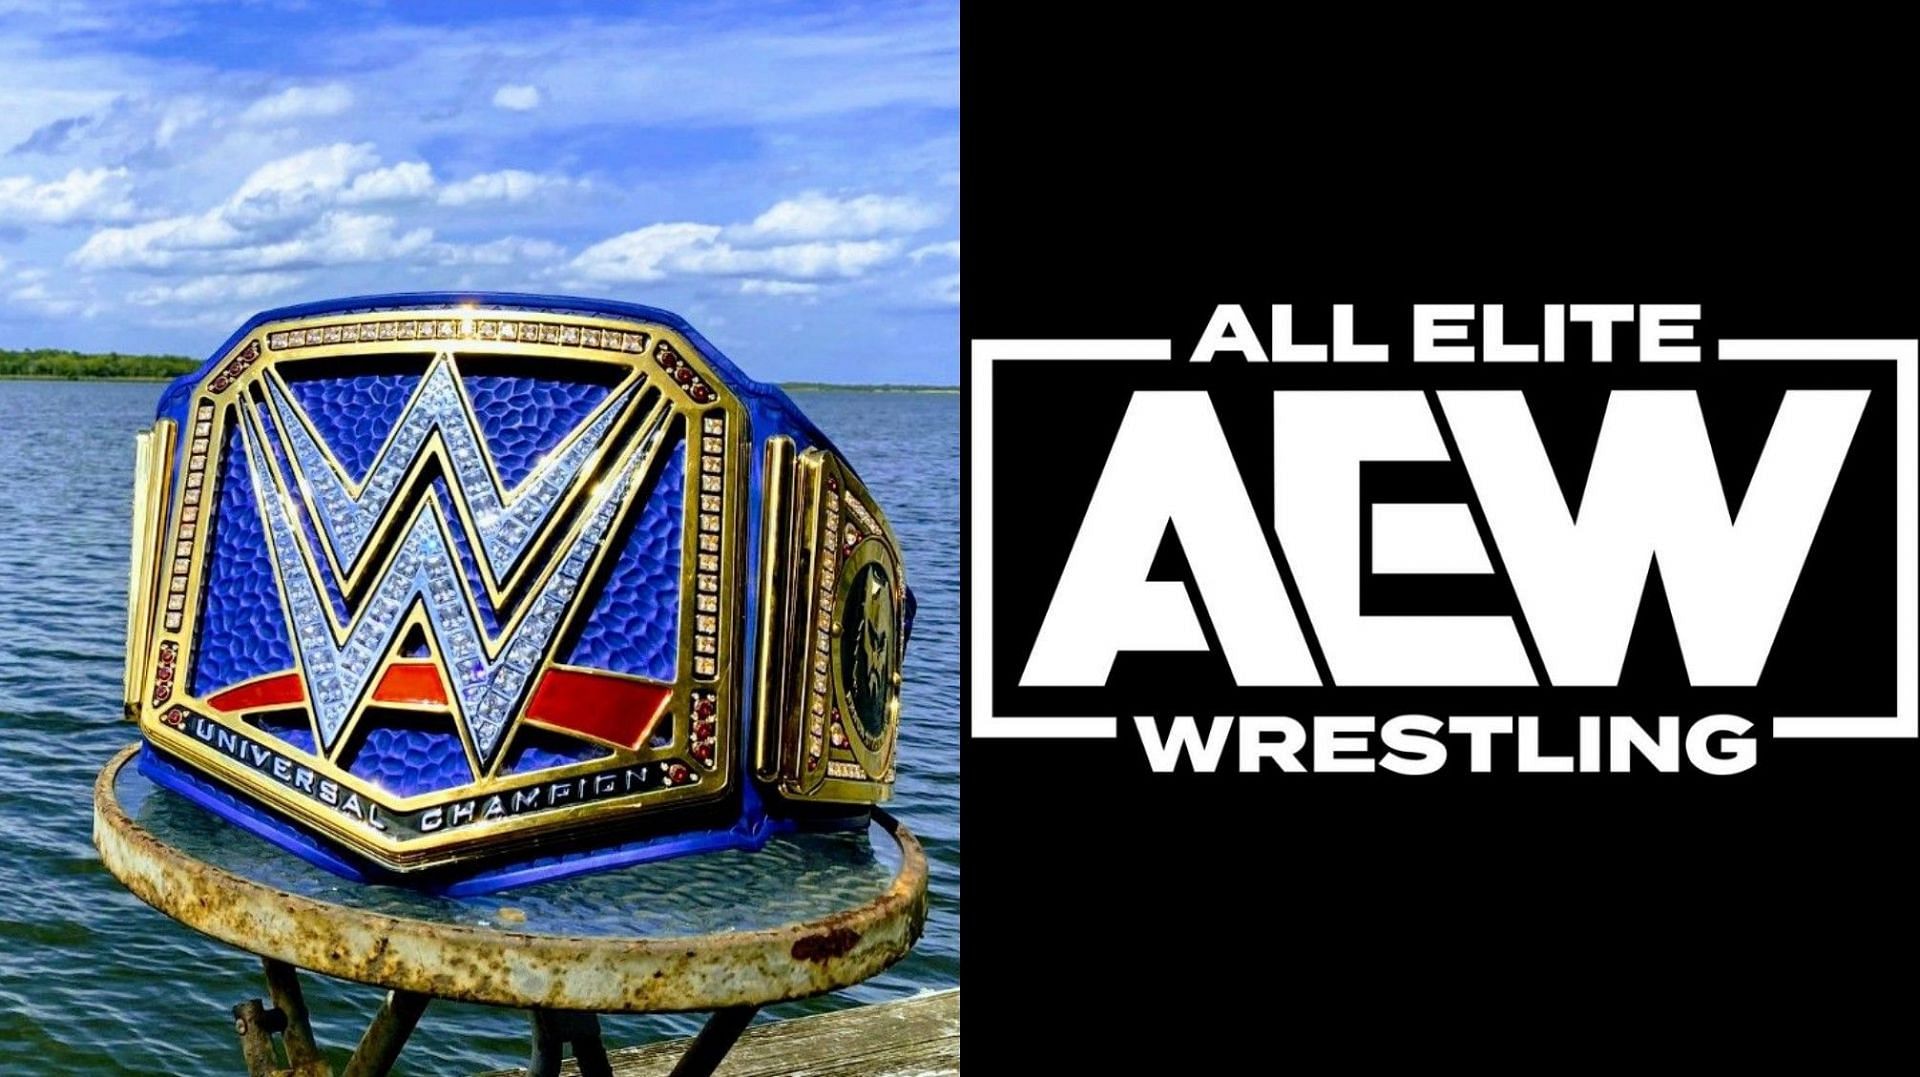 Is 2-time WWE Universal Champion AEW bound?